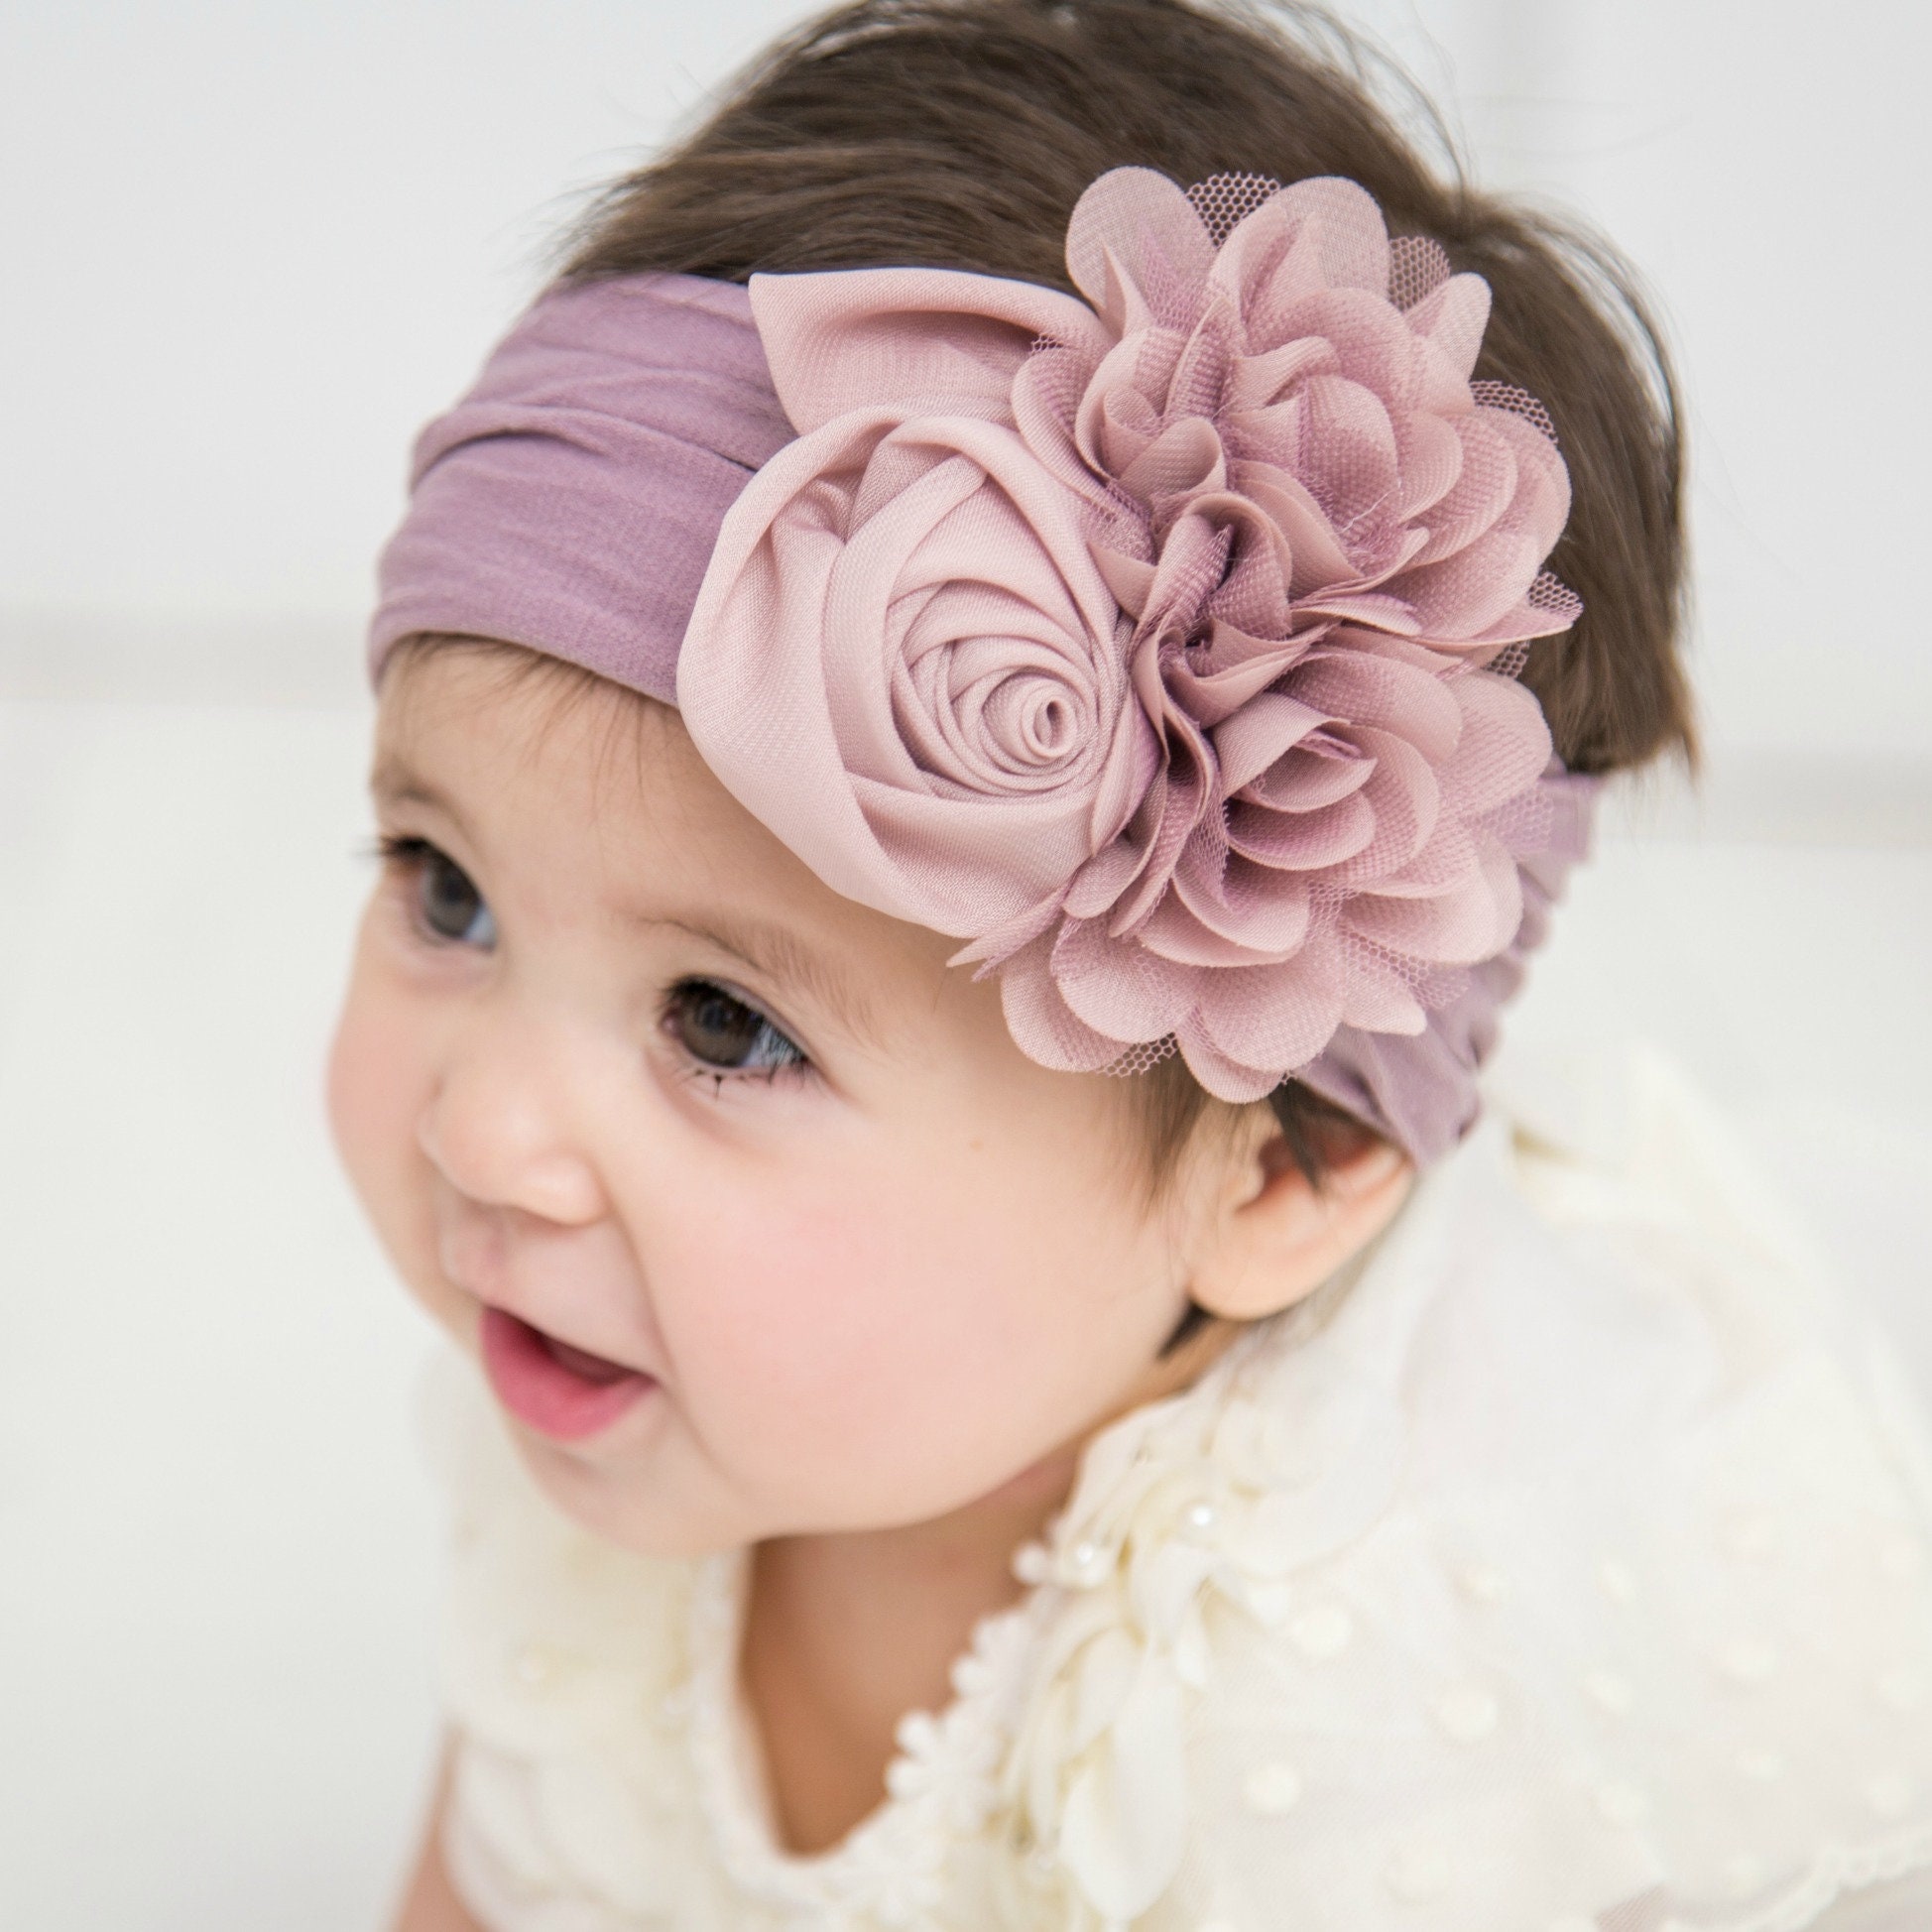 TOYANDONA 3 Pcs Baby Girl Headbands Elastic Nylon Floral Hairband Photo Props for Newborn